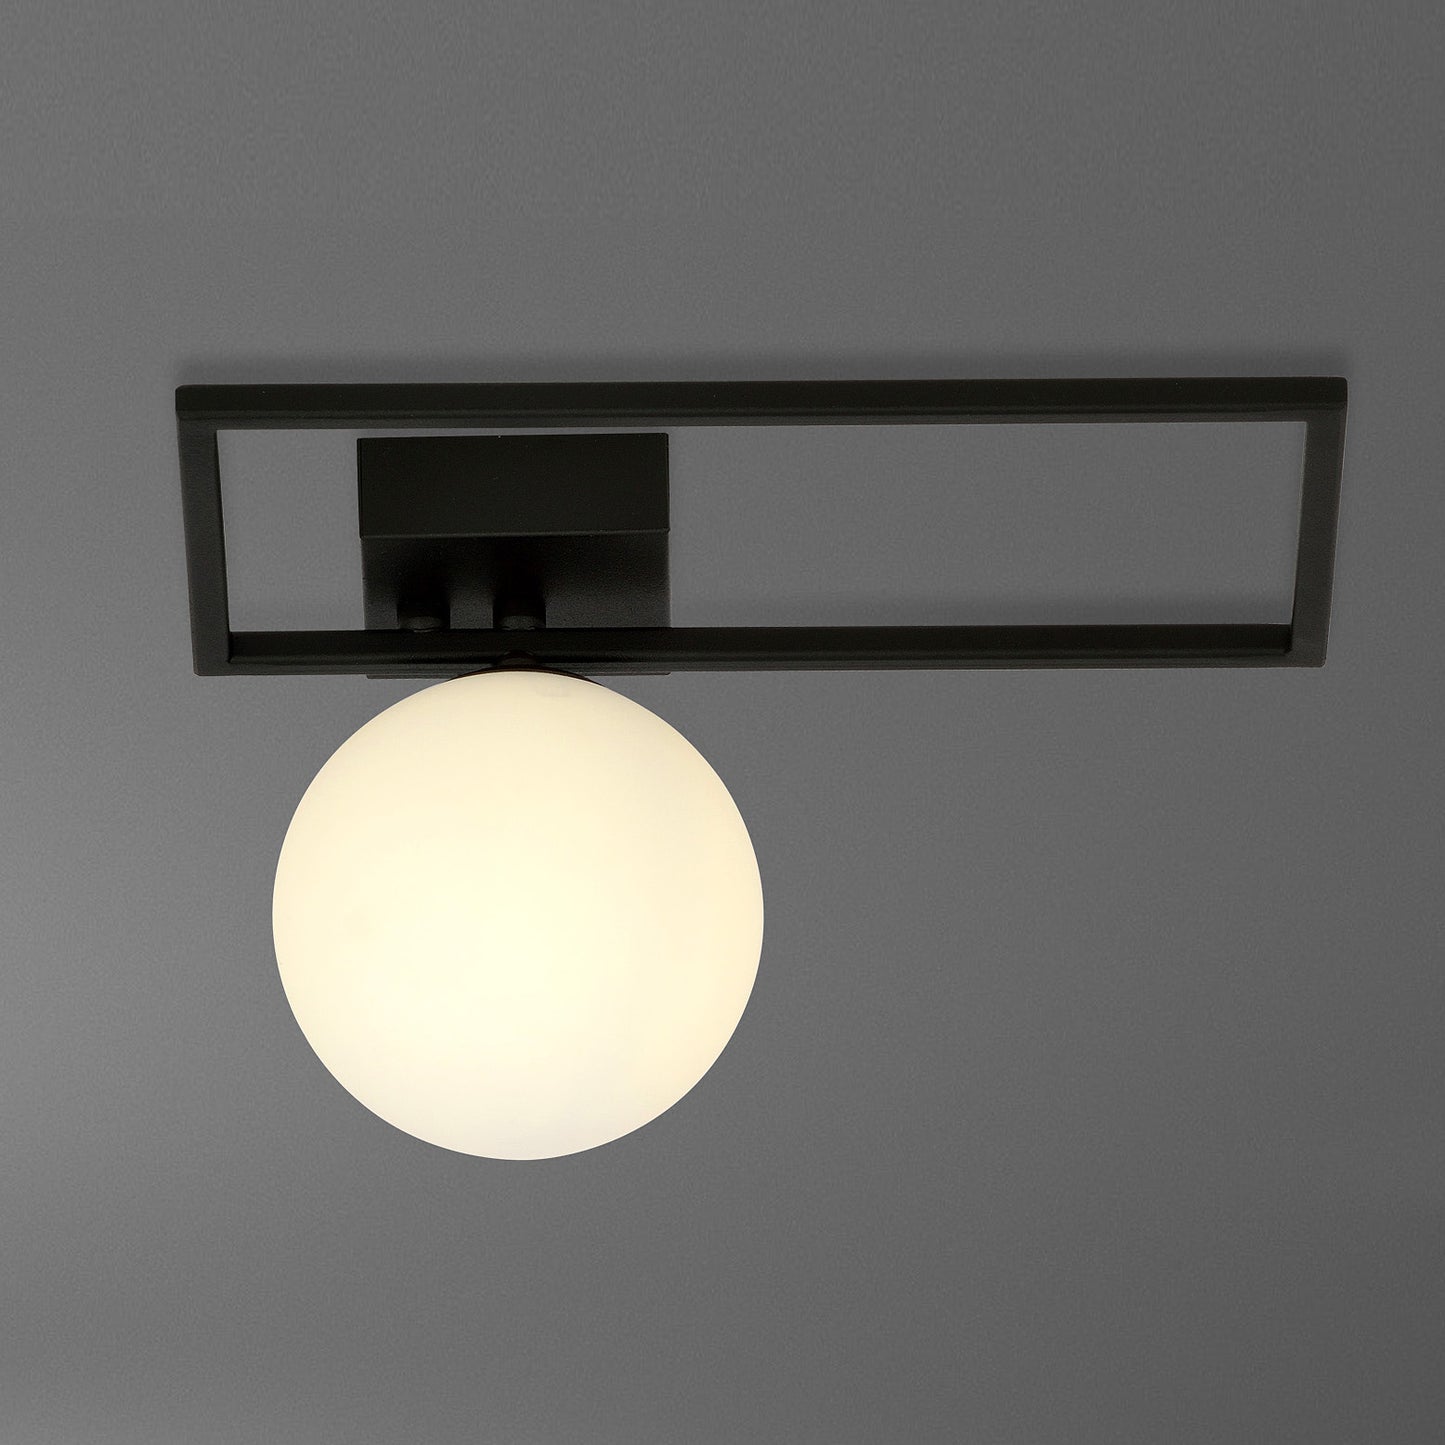 CGC IMAGO 1D BLACK/OPAL CEILING LAMP LIGHT